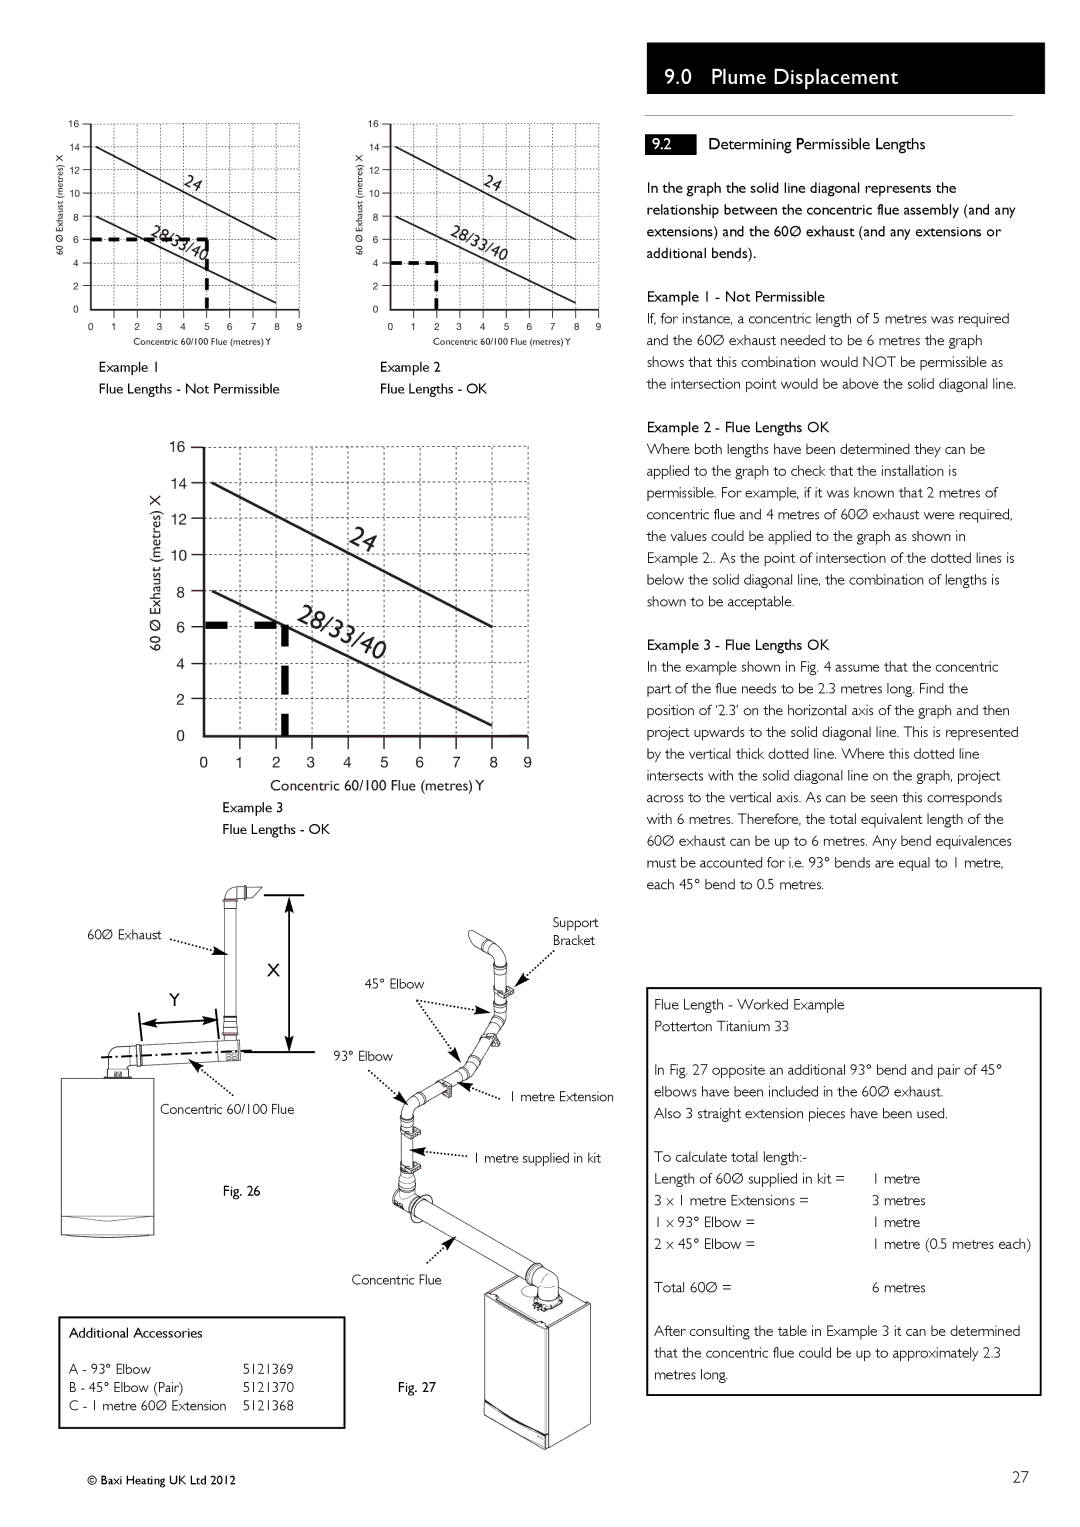 Baxi Potterton 47-393-42, 47-393-40 manual 28/33/40, Determining Permissible Lengths, Example Flue Lengths OK, 5121368 